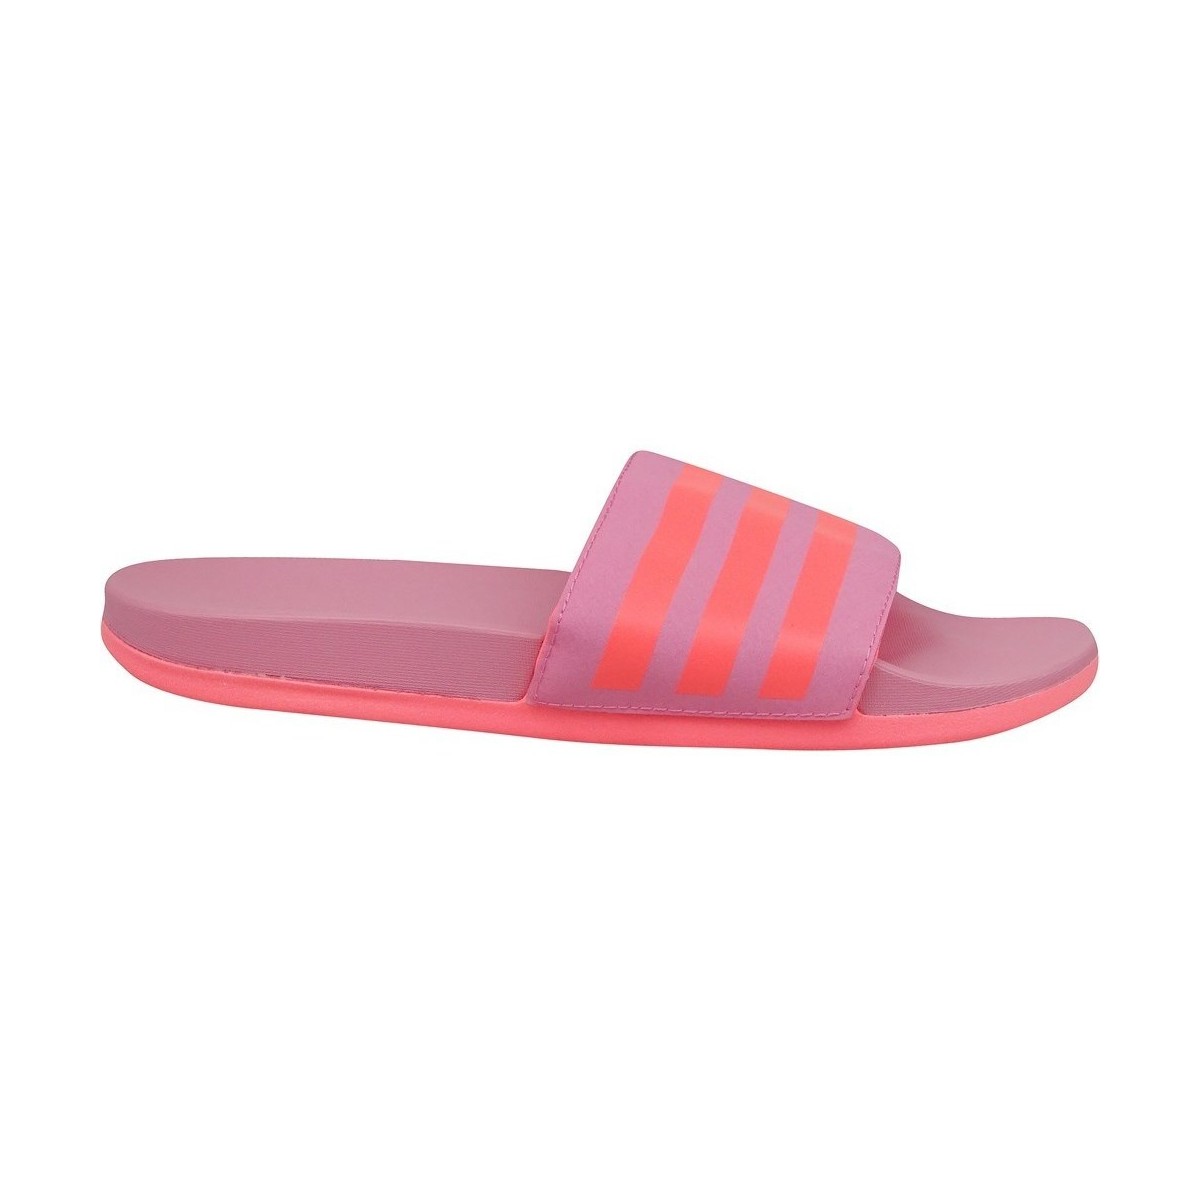 Sko Dame Vandsportssko adidas Originals Adilette Comfort Pink